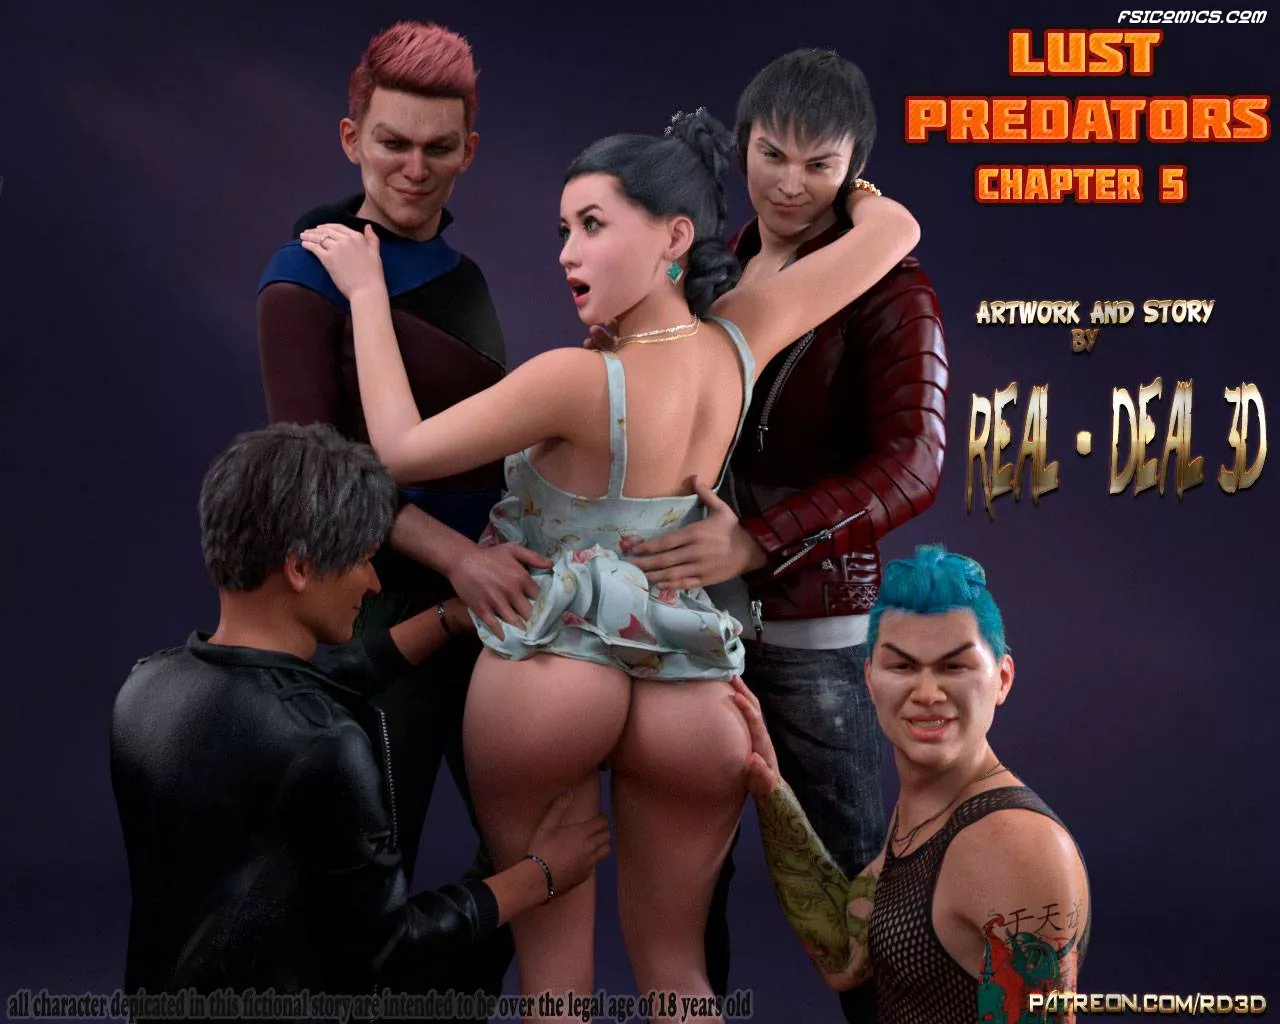 Lust Predators Chapter 5 - Real Deal 3D - 19 - FSIComics